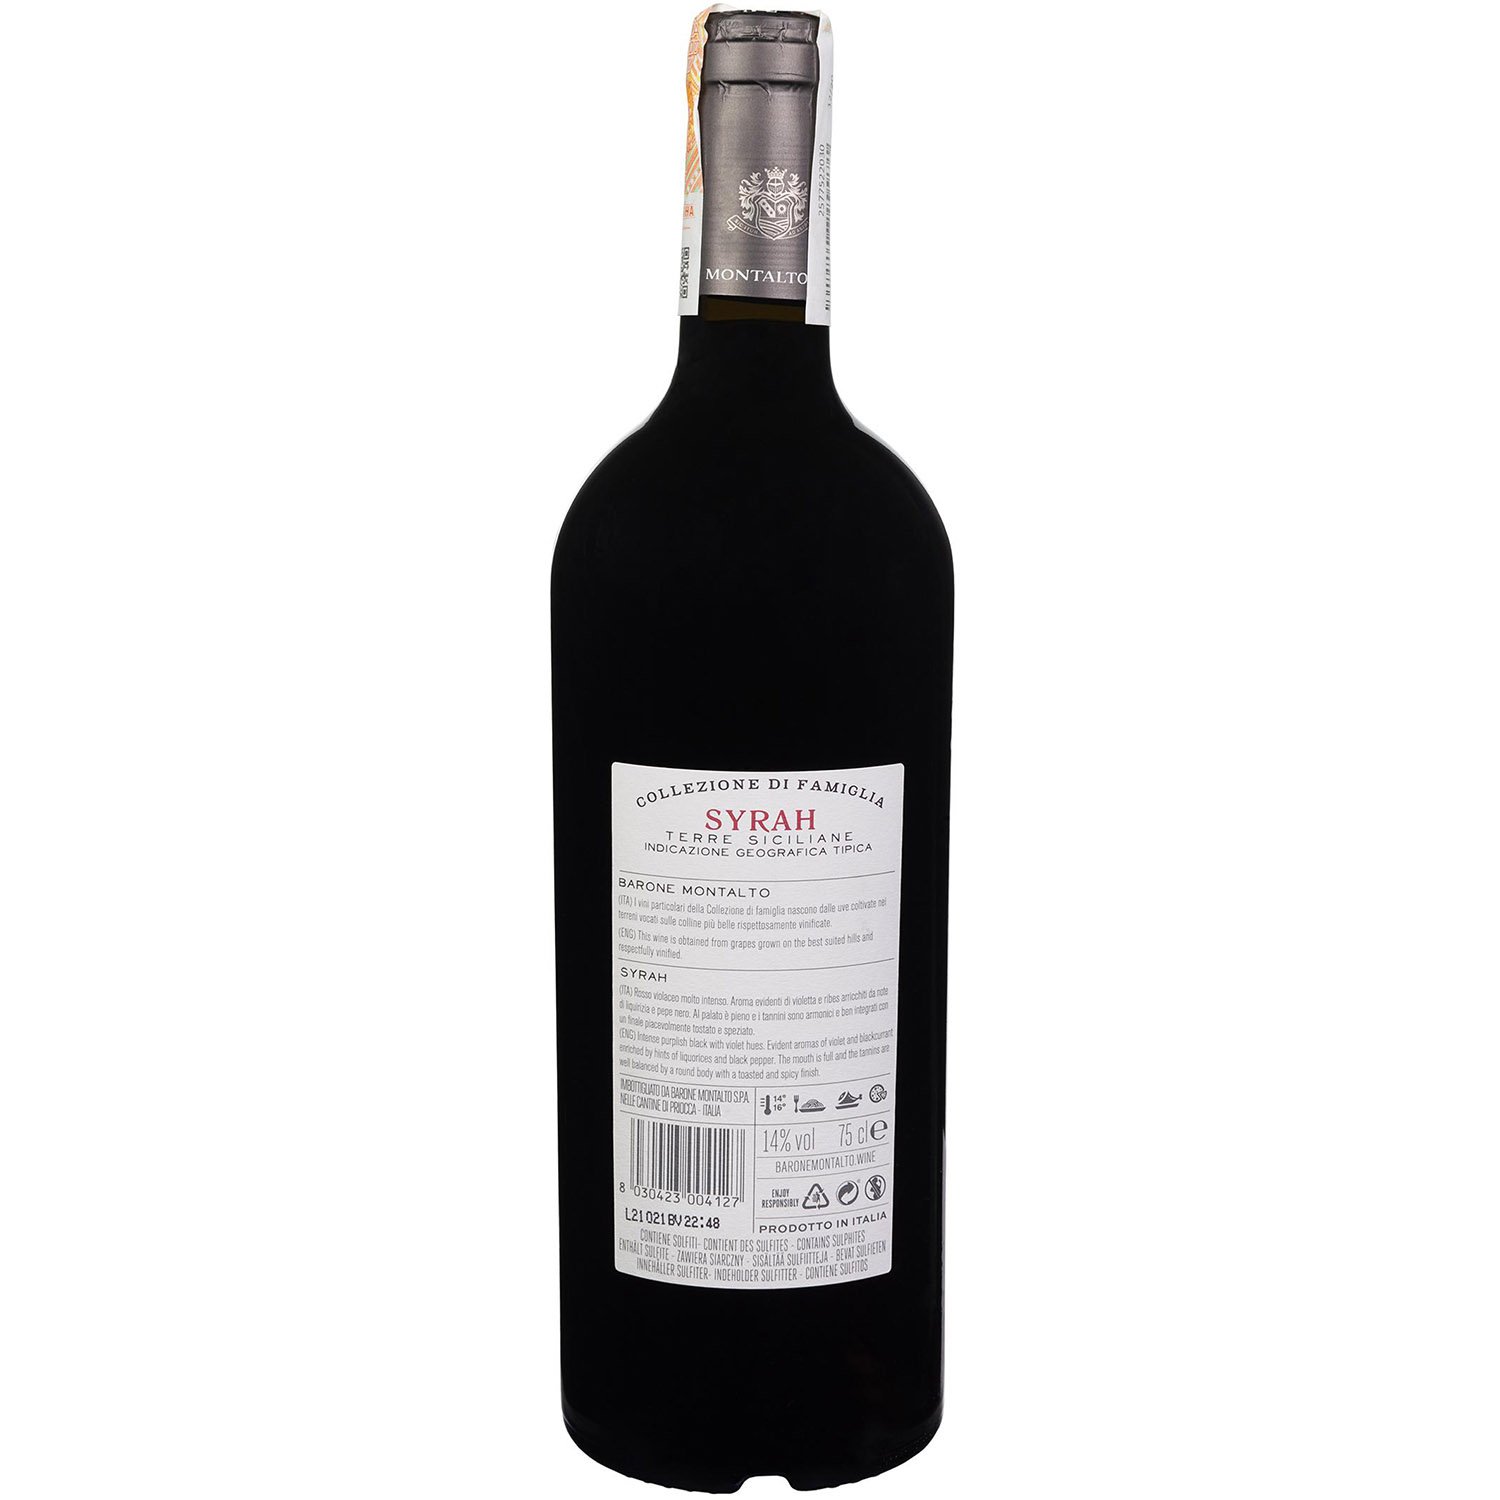 Вино Barone Montalto Collection Di Famiglia Syrah Terre Siciliane IGT, червоне, сухе, 0,75 л - фото 2